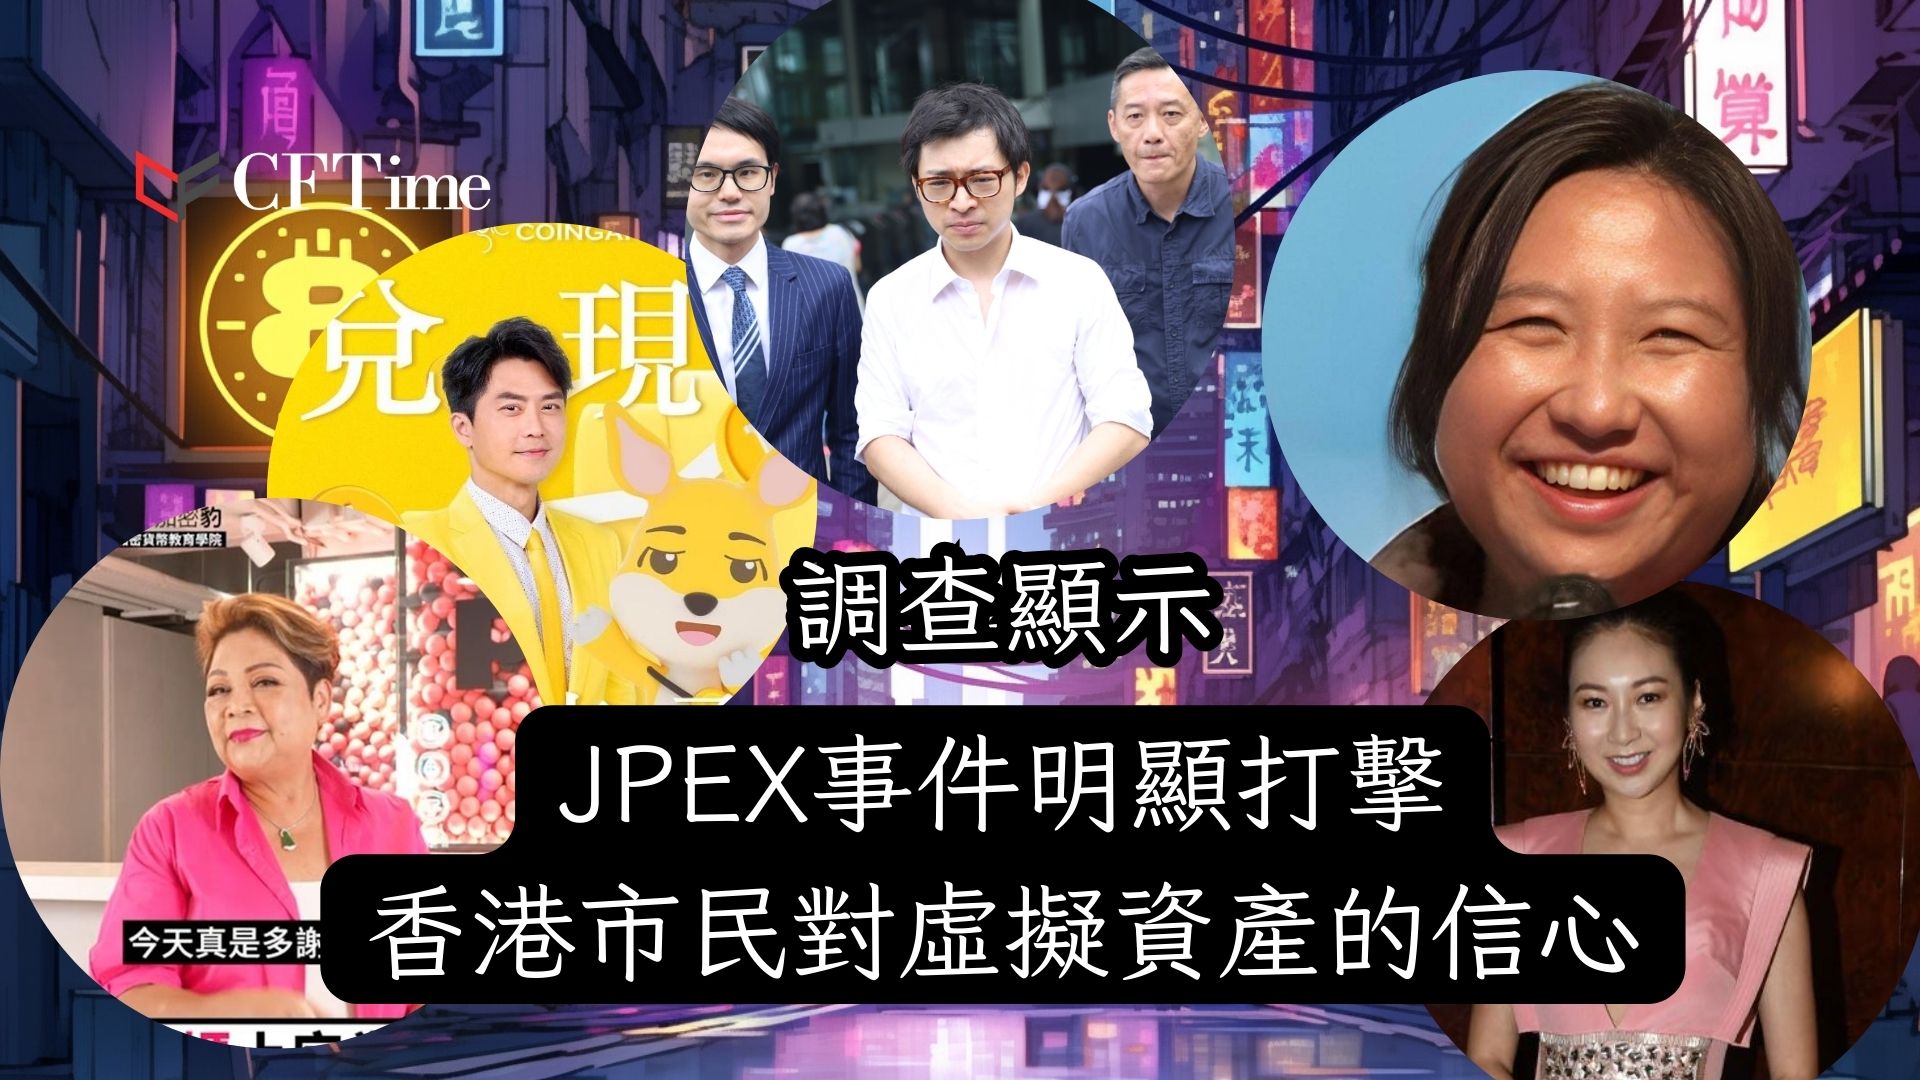 JPEX事件明顯打擊香港市民